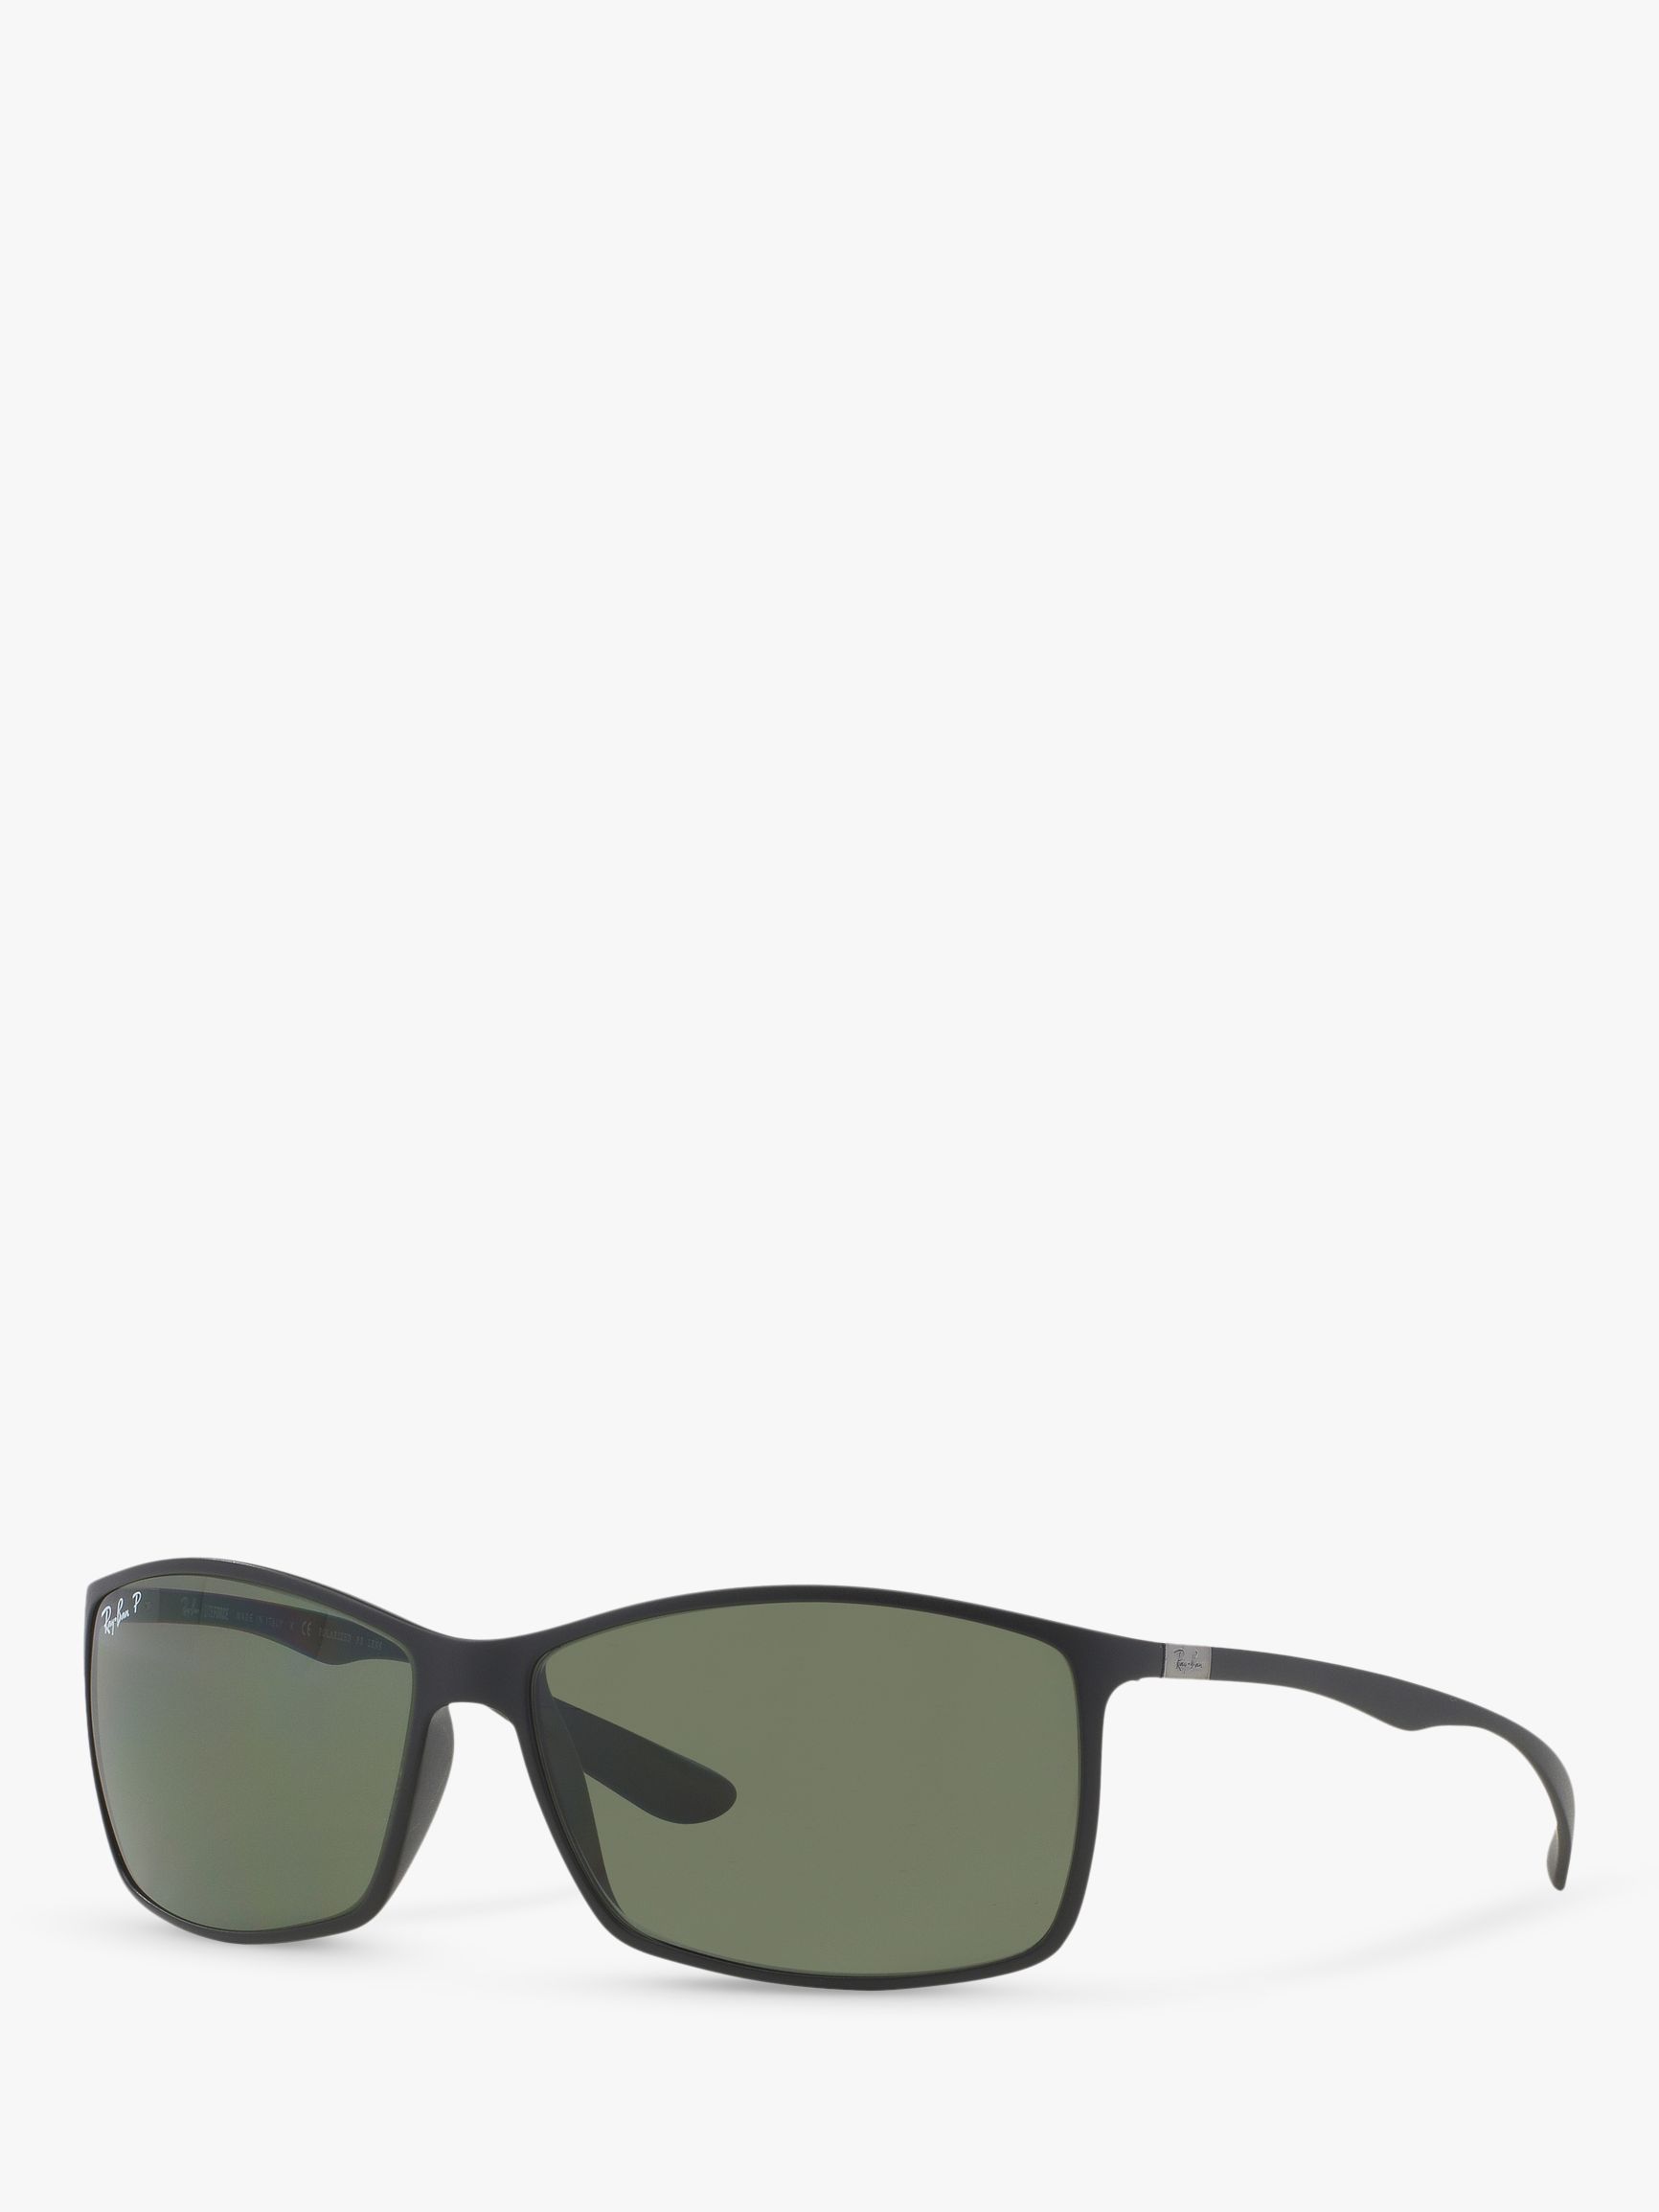 Ray-Ban RB4179 Men's Liteforce Tech Polarised Rectangular Sunglasses,  Black/Green at John Lewis & Partners